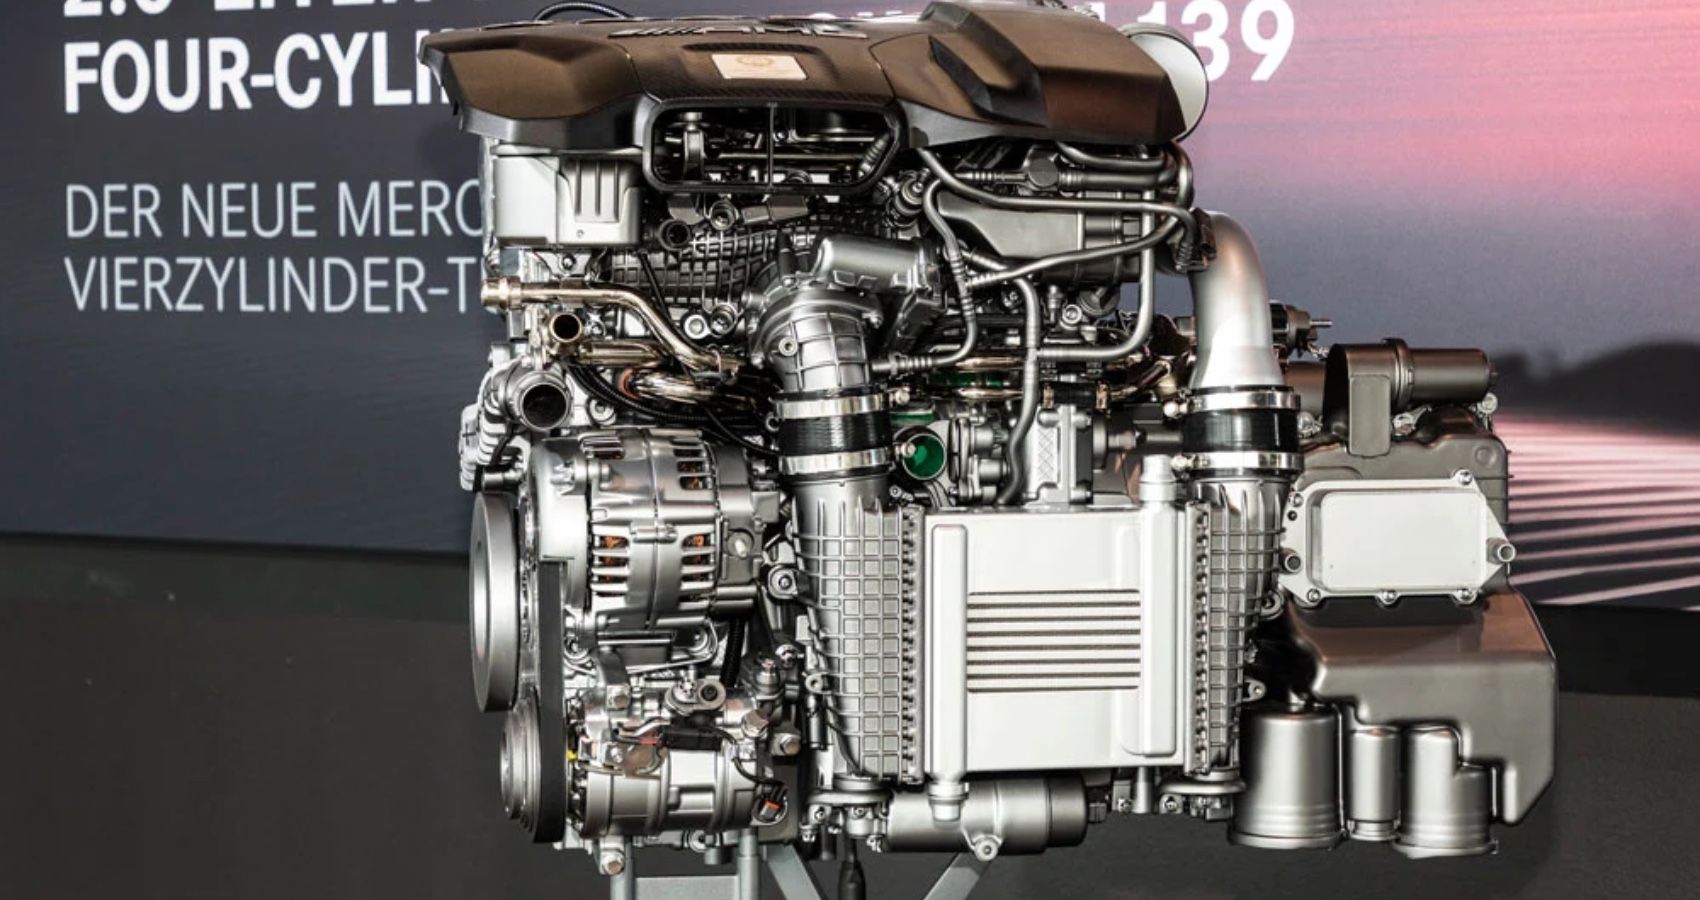 Mercedes-AMG M139 Engine at display